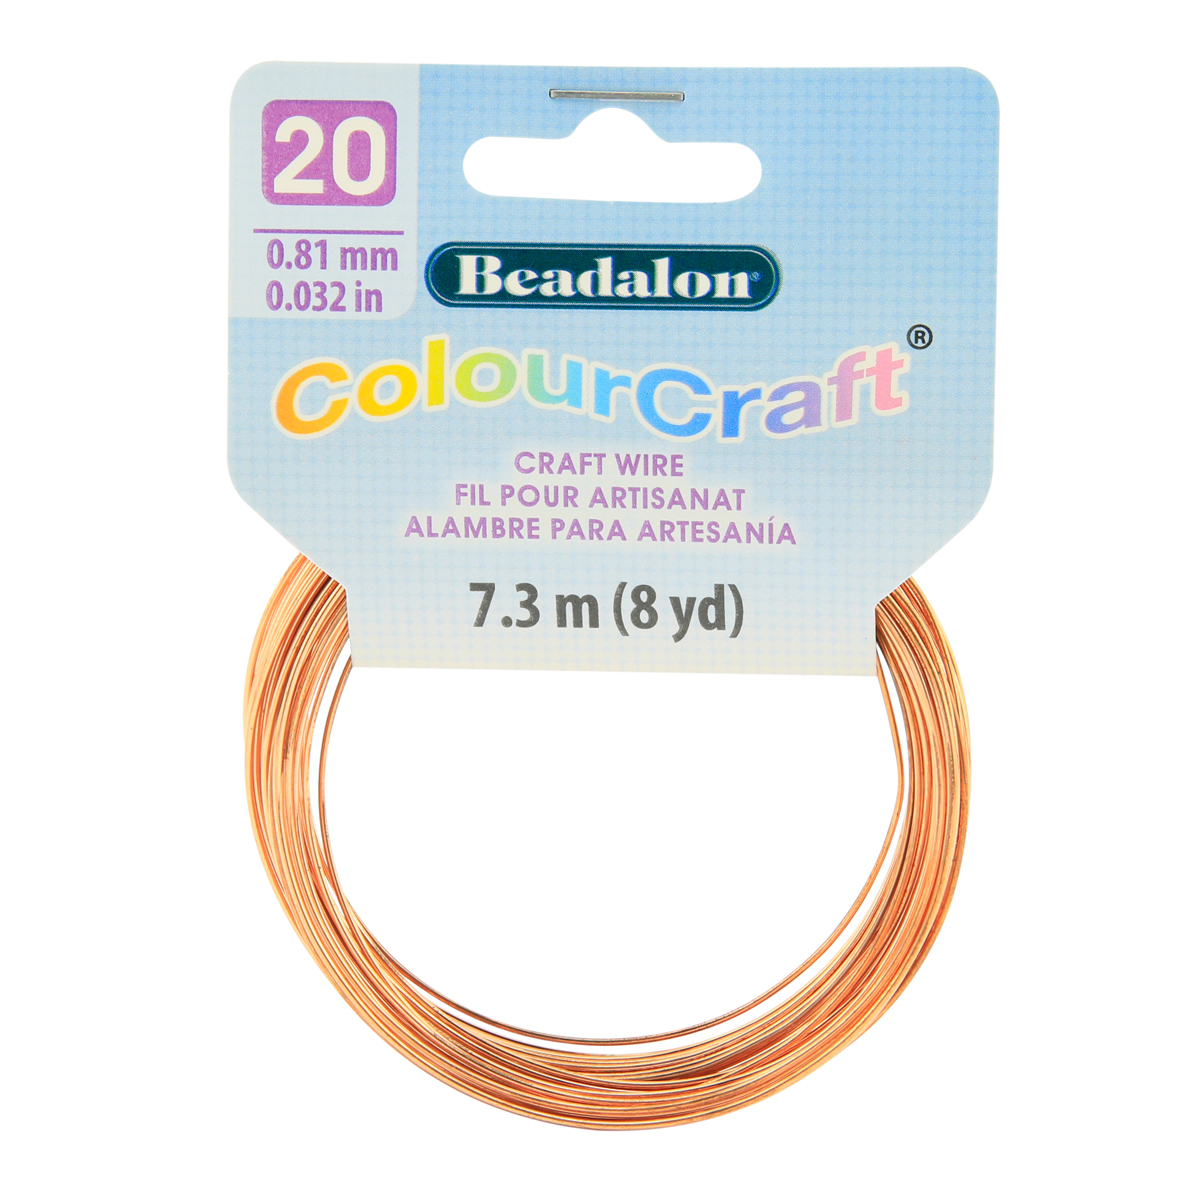 ColourCraft Wire, 20 Gauge 0.032 in / 0.81 mm, Copper, 7.3 m / 8 yd coil